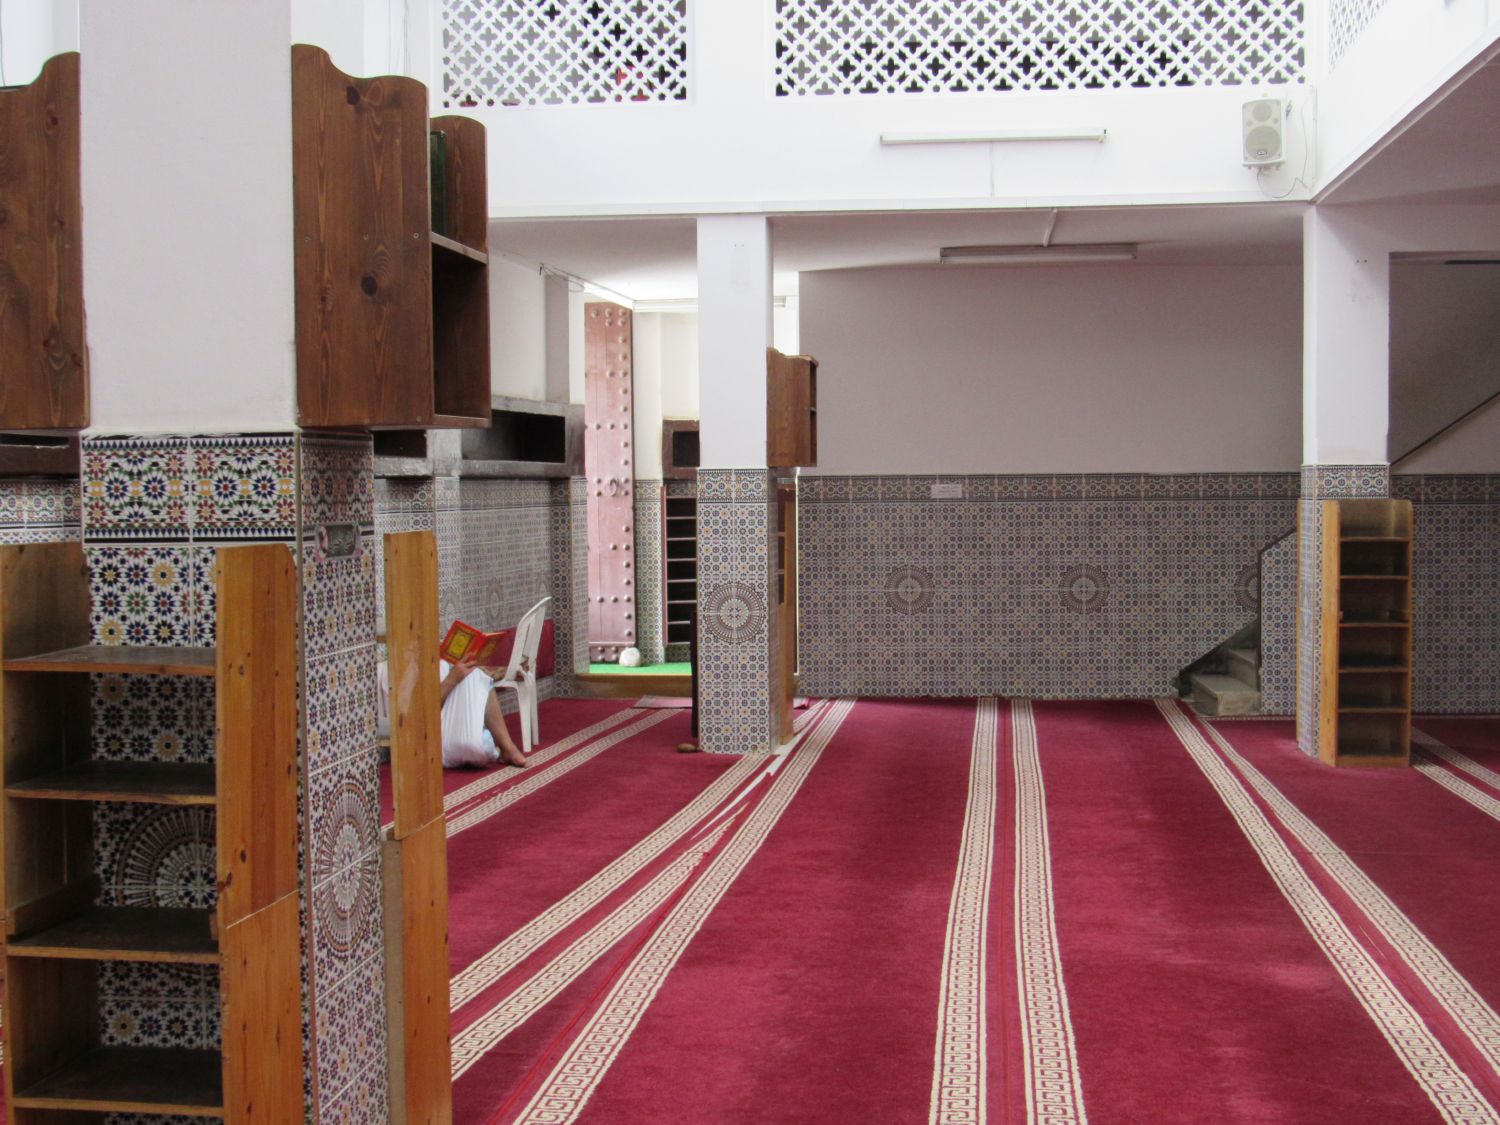 Mosquée El Mellah - Interior view, carvings in the prayer hall wall.